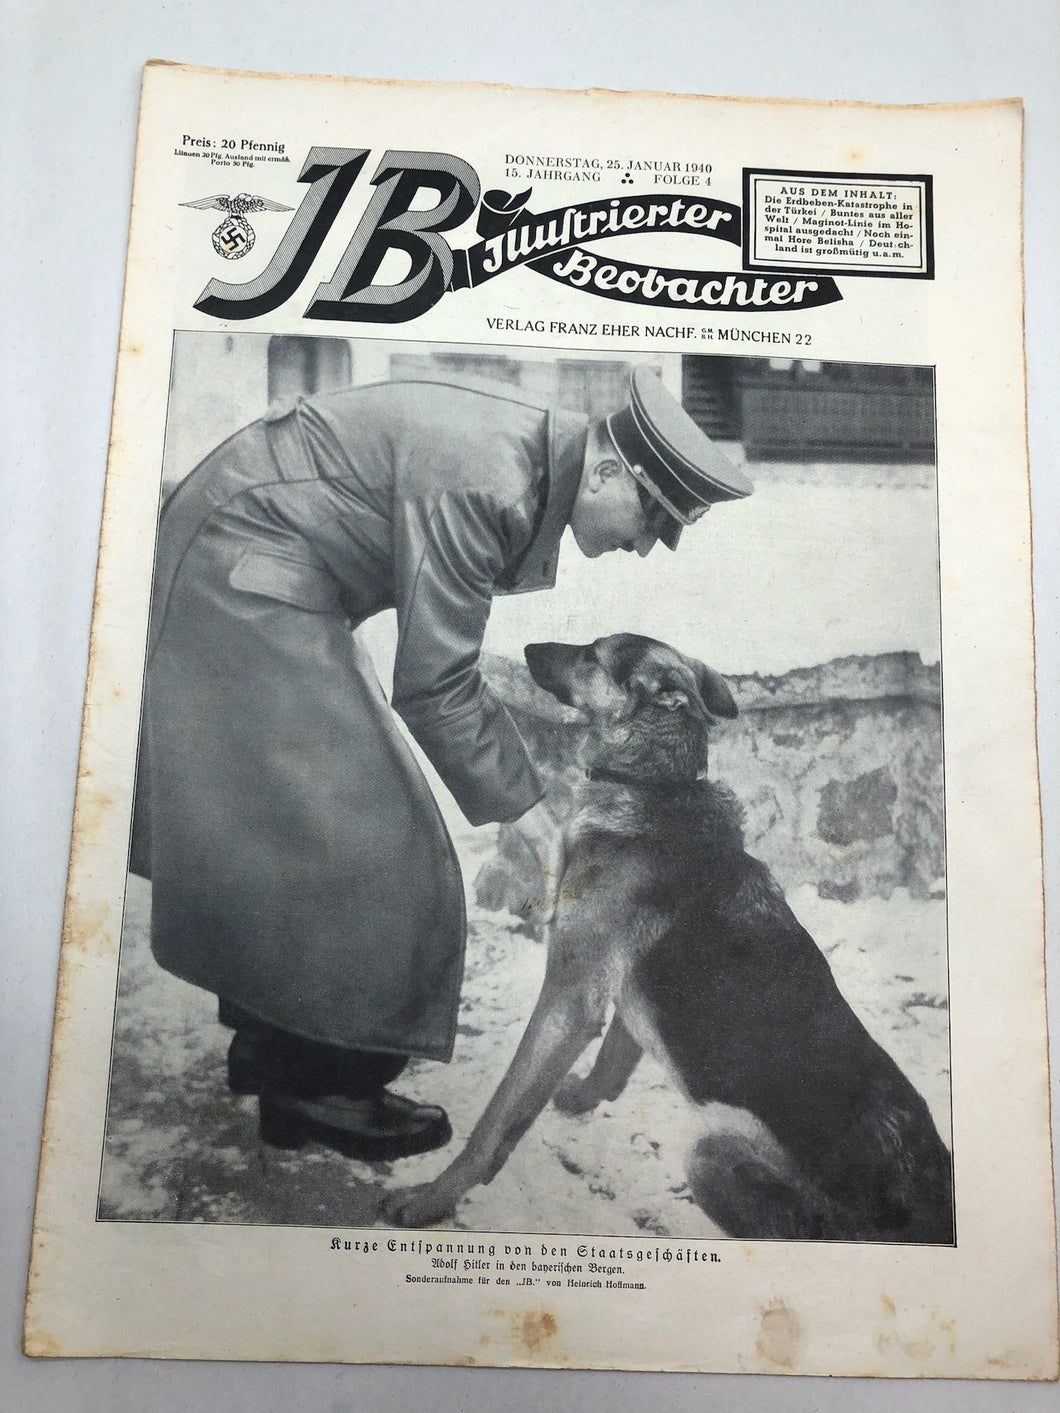 JB Juustrierter Beobachter NSDAP Magazine Original WW2 German - 25 January 1940